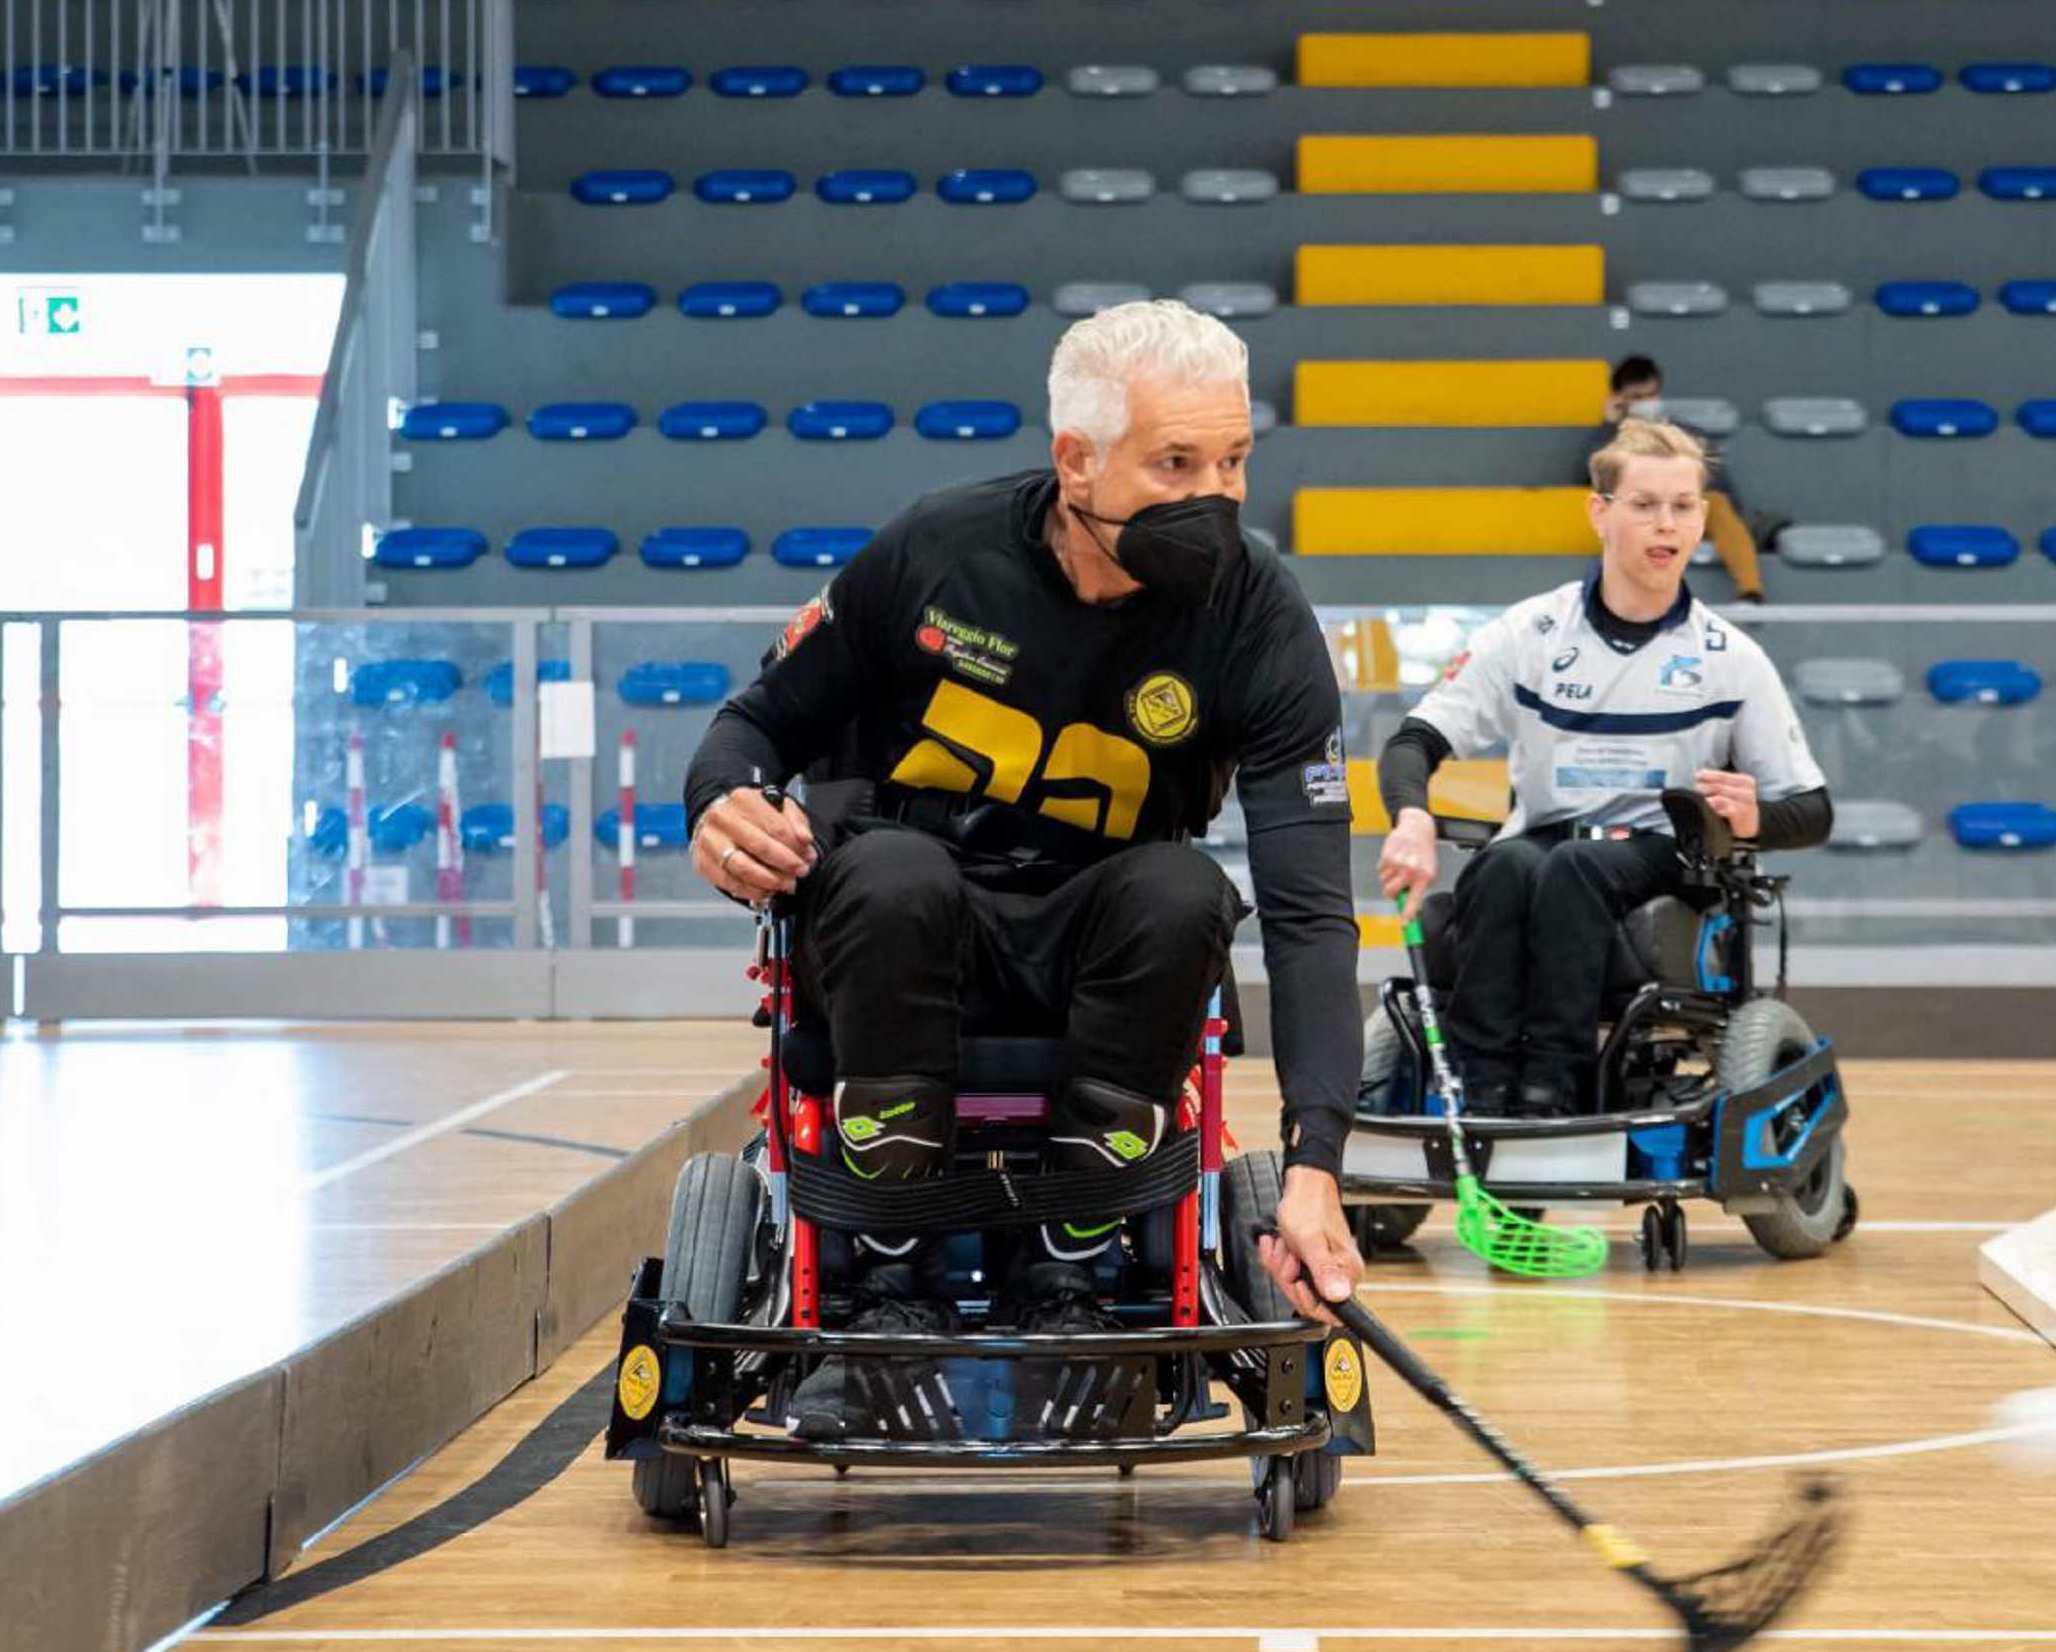 Wheelchair hockey tournament “In memory of Enrico Marchetti”